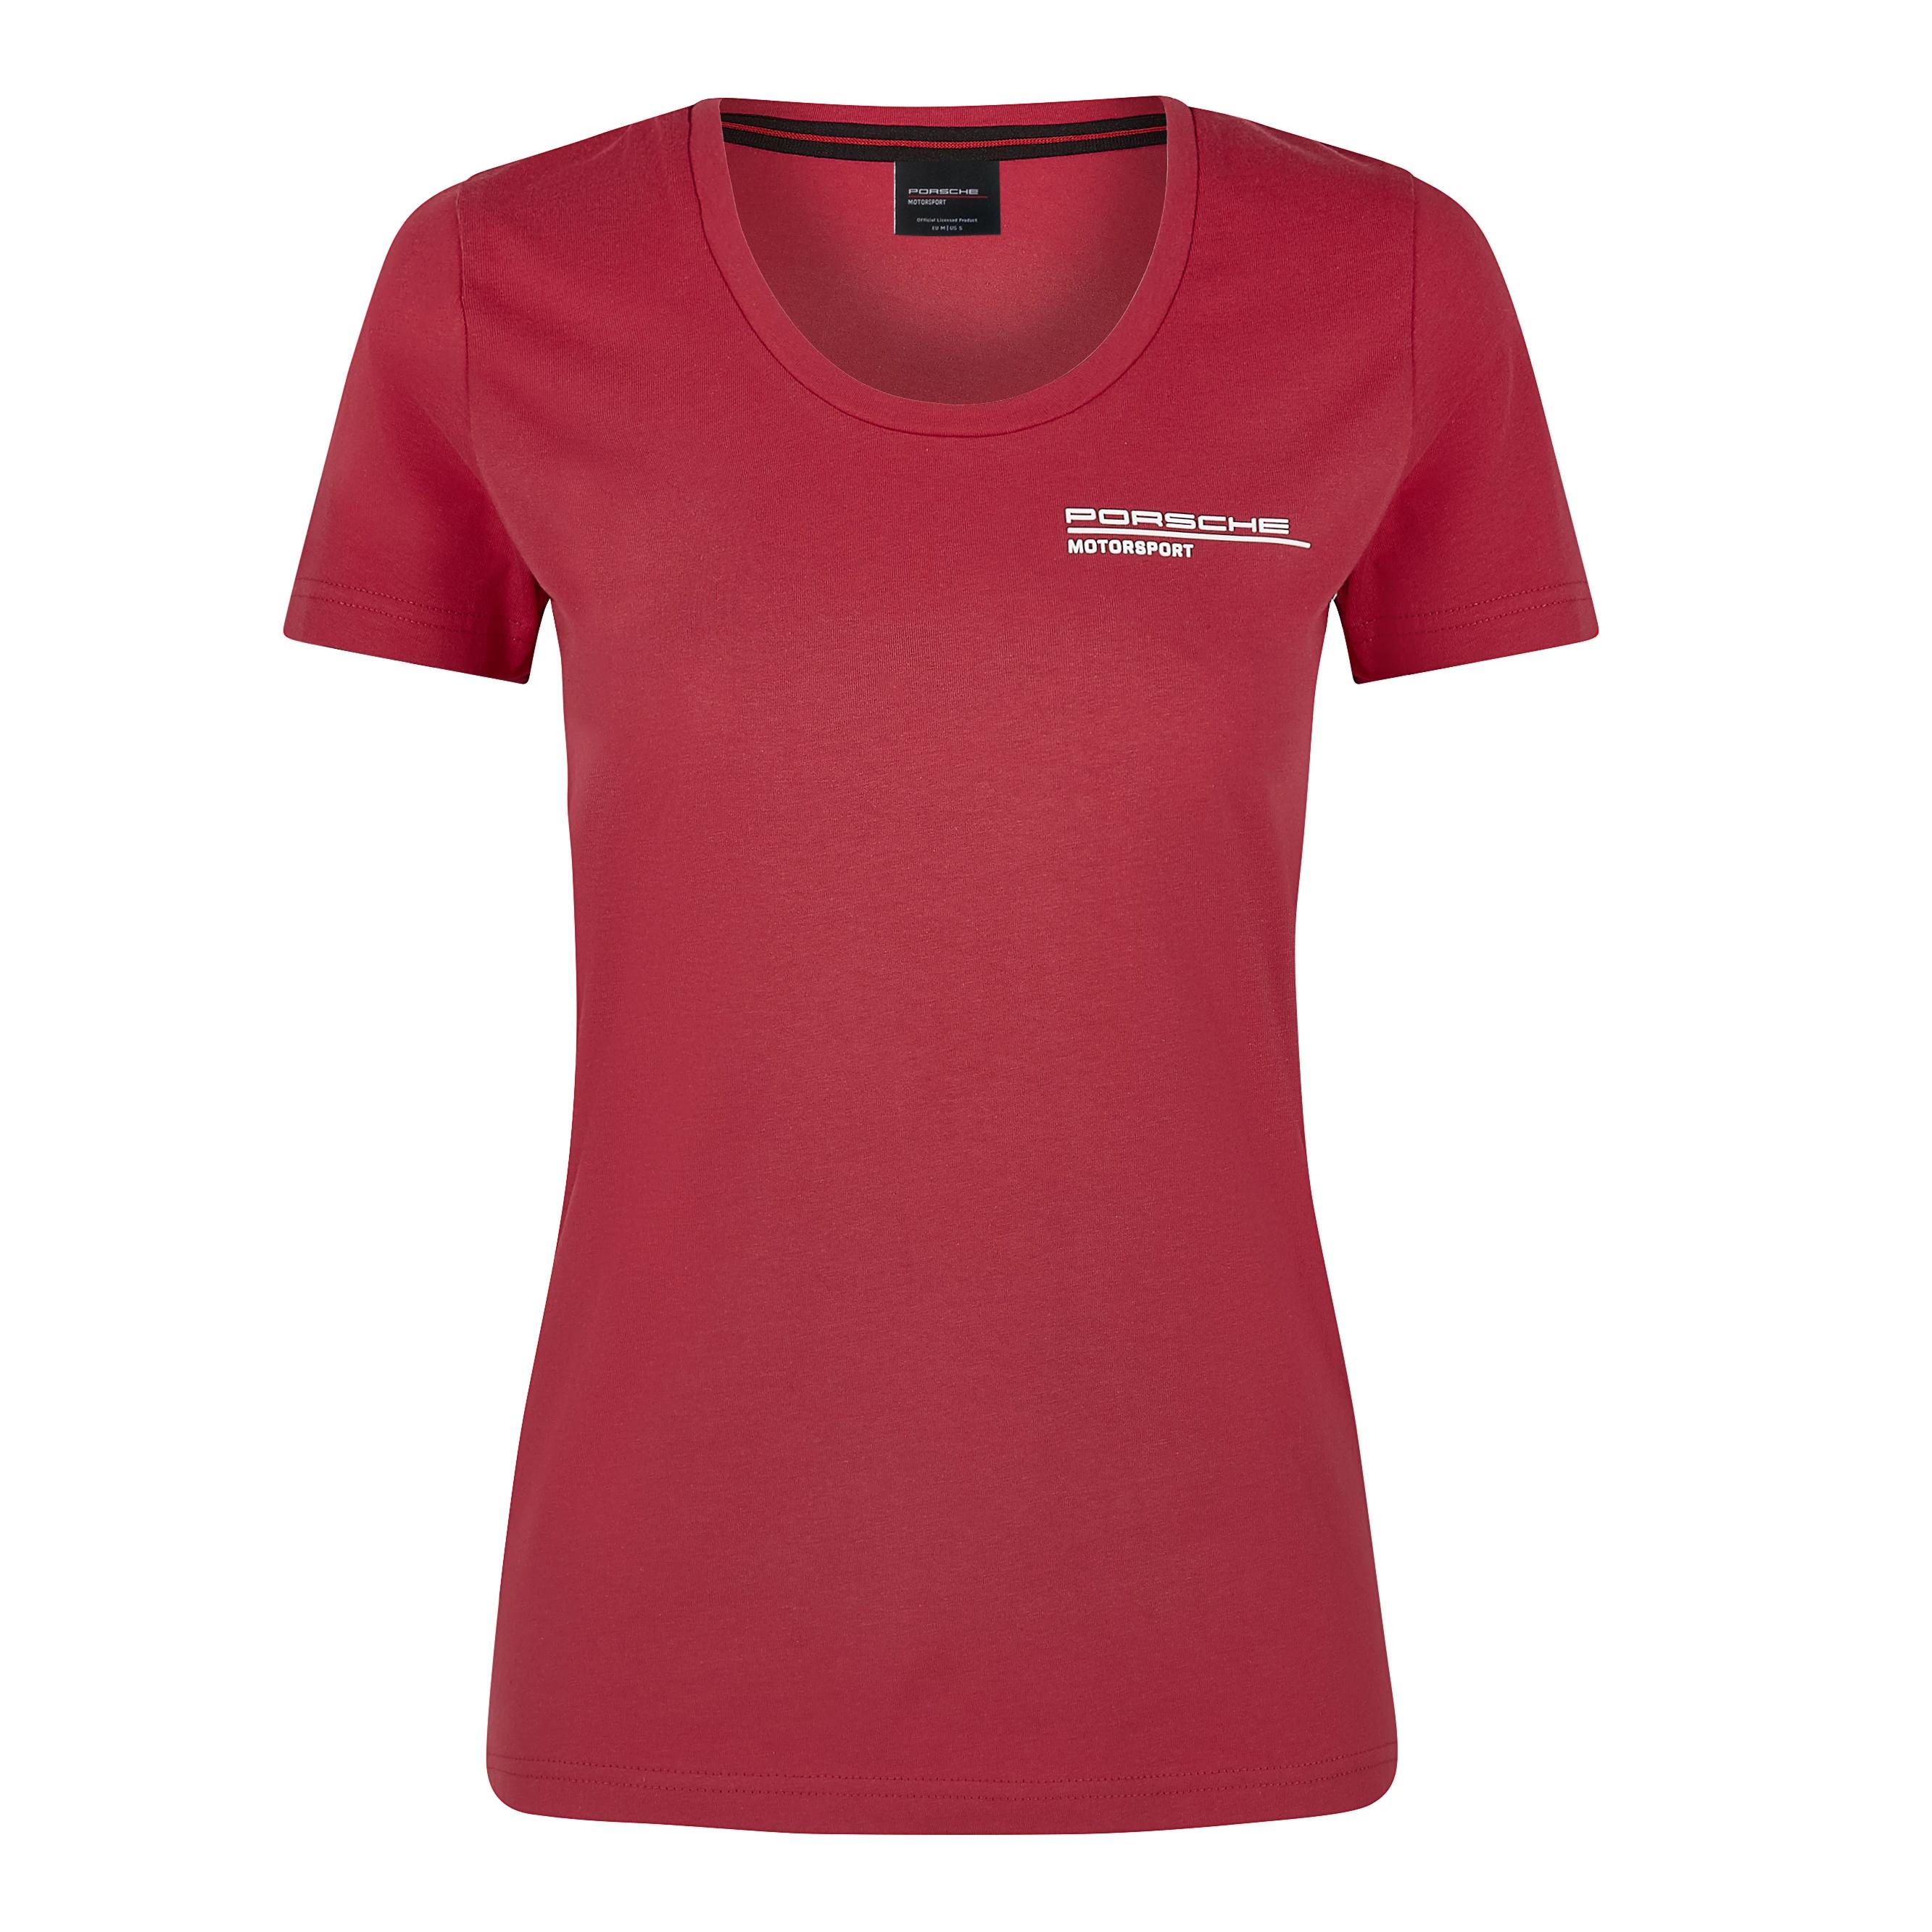 Porsche Motorsport Women's T-Shirt Red